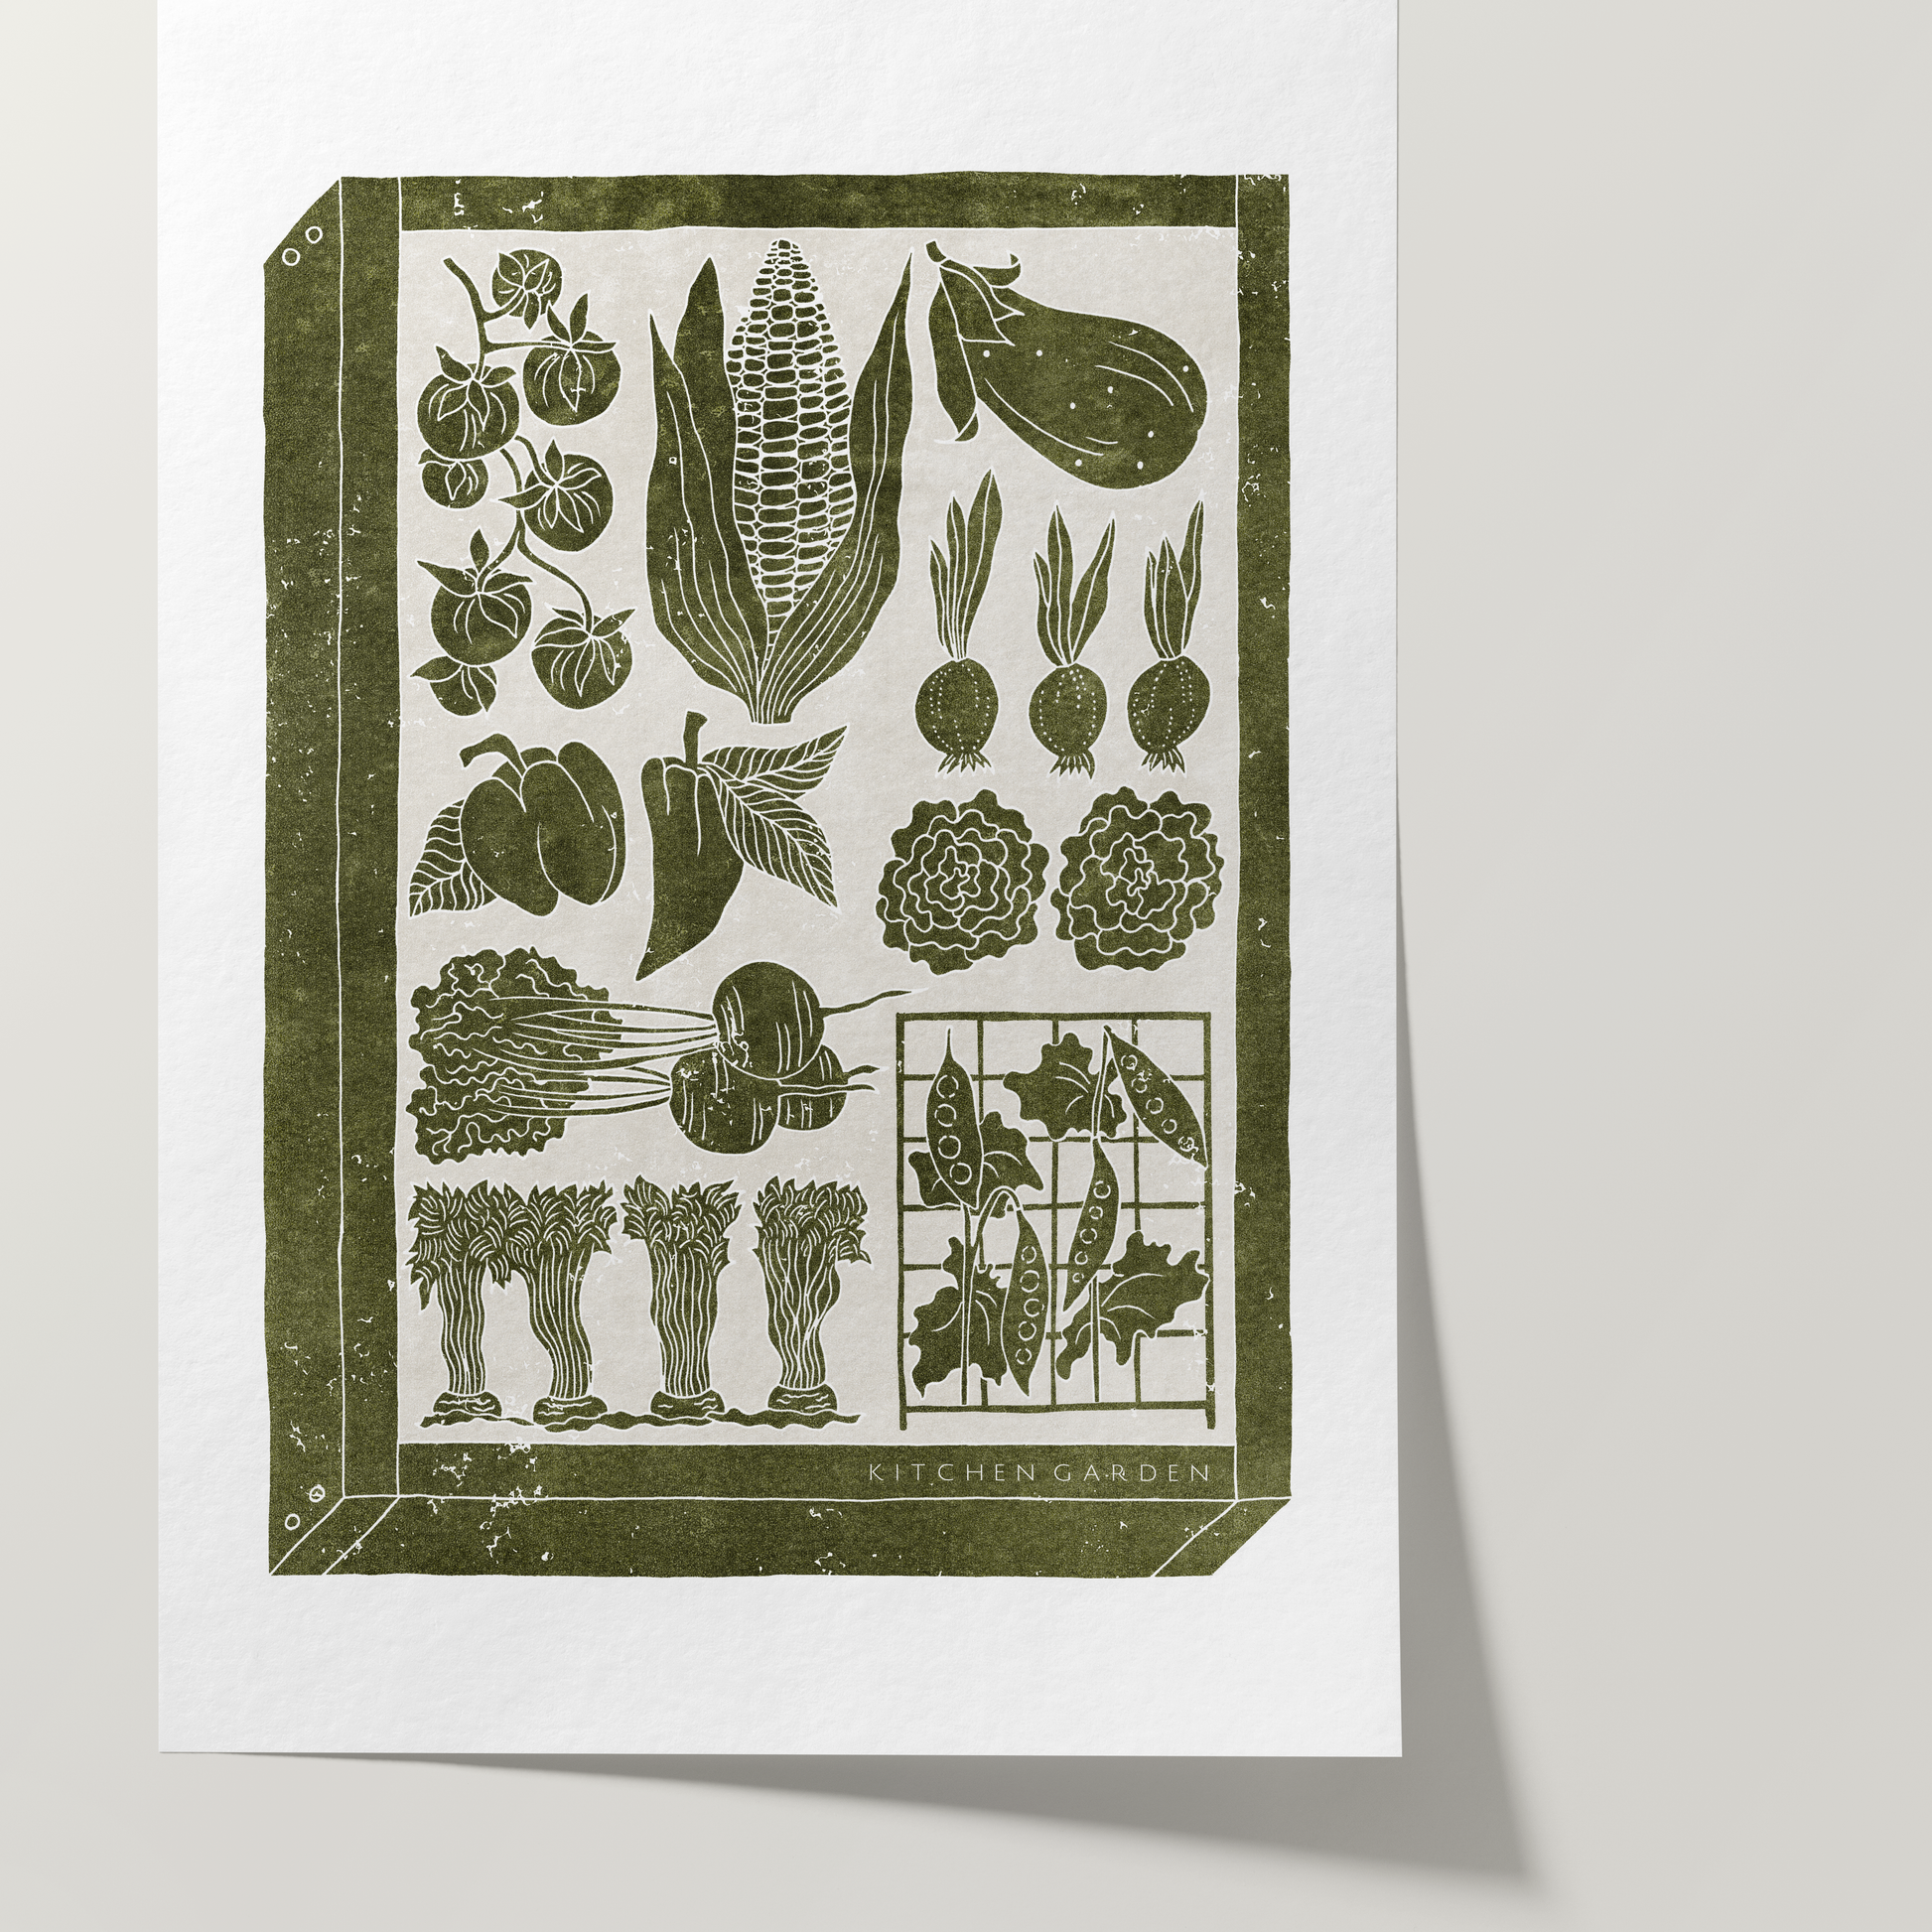 Home Decor Print - Nature-inspired Prints - Kitchen Garden - Framed - Linocut Effect Illustration - Green - Hahnemühle German Etching Paper